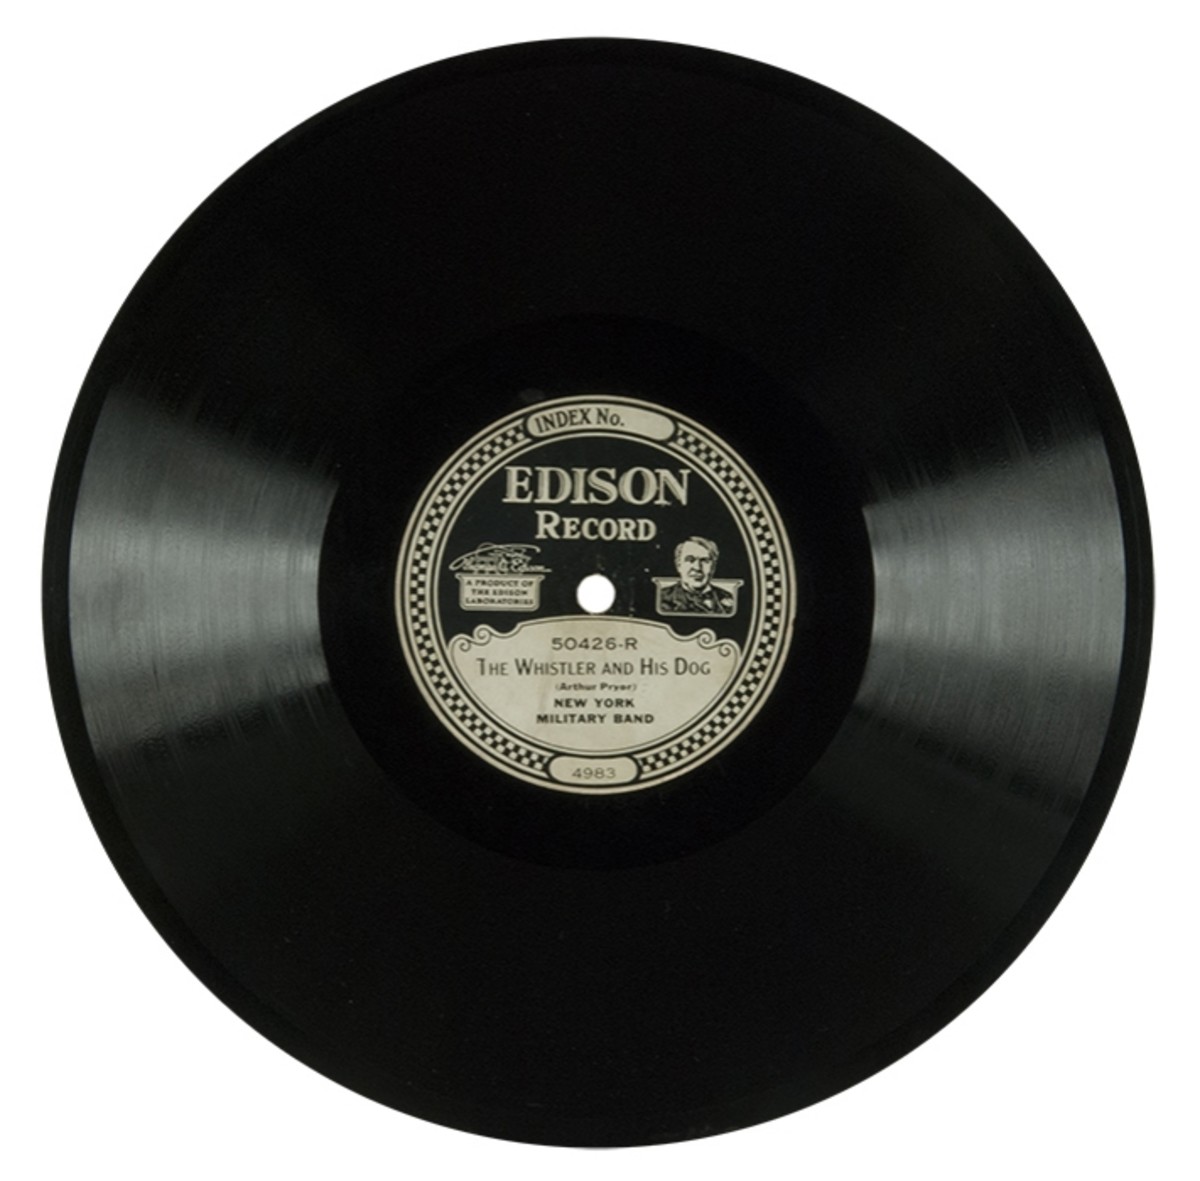 The Edison Diamond Disc Record